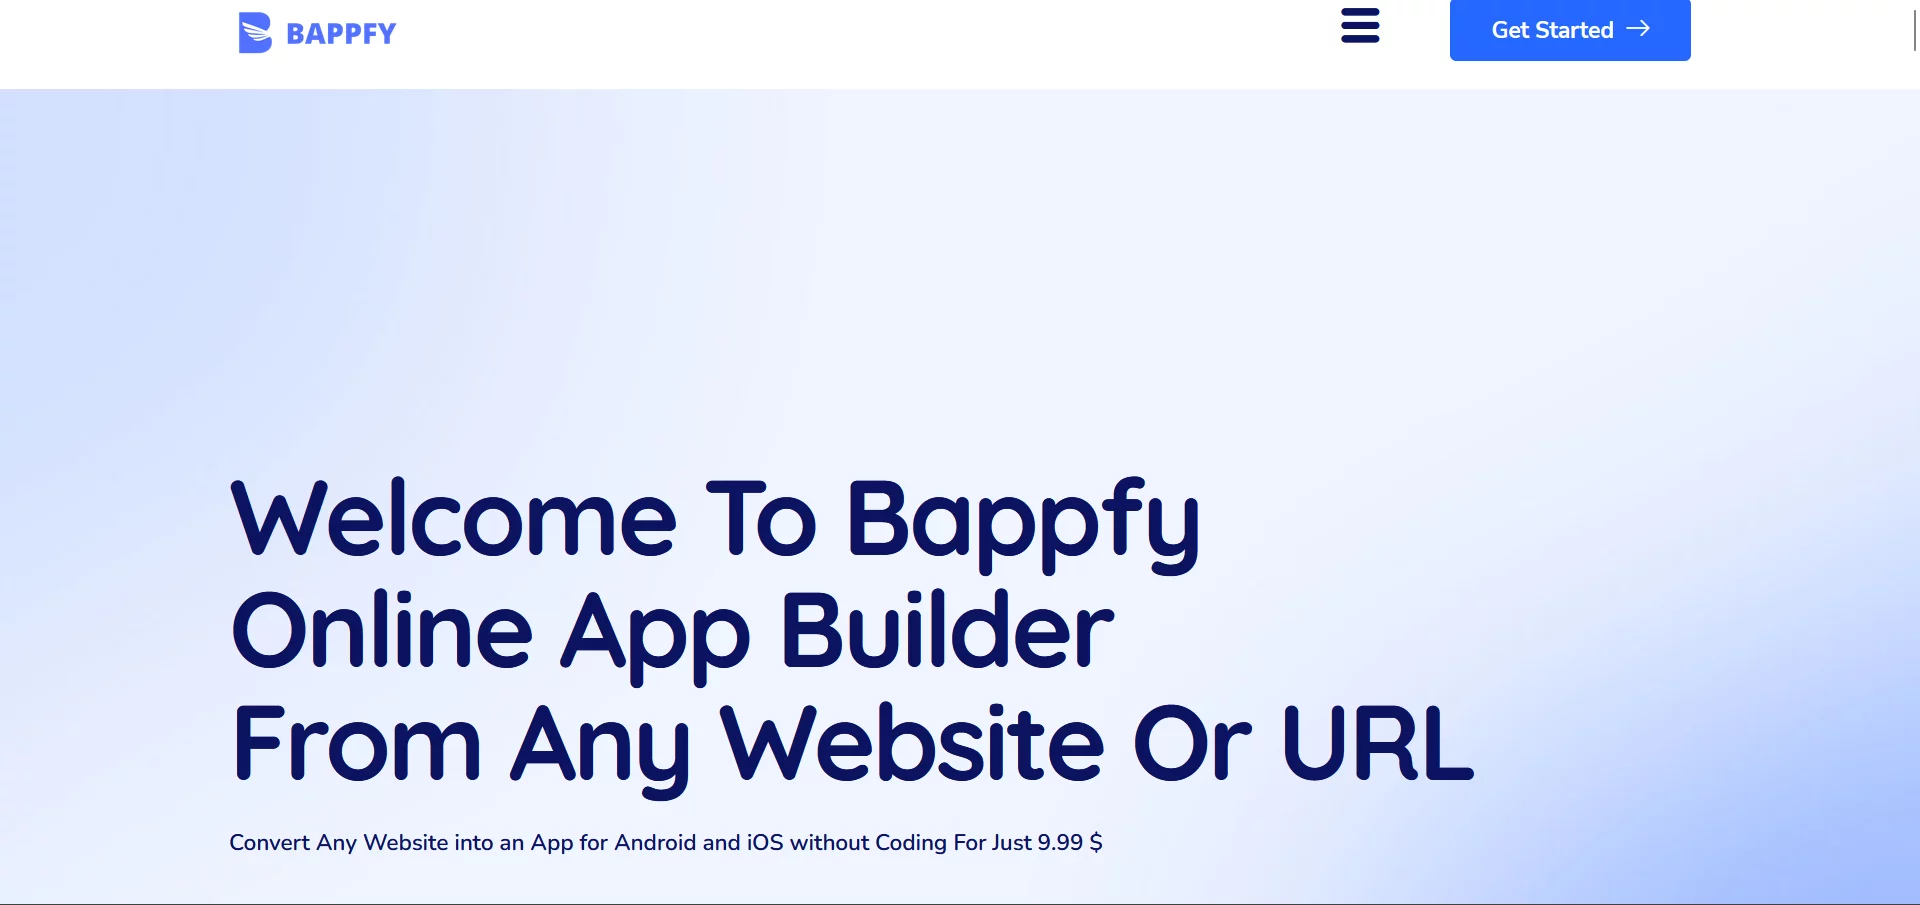  Online App Builder From Any Website 